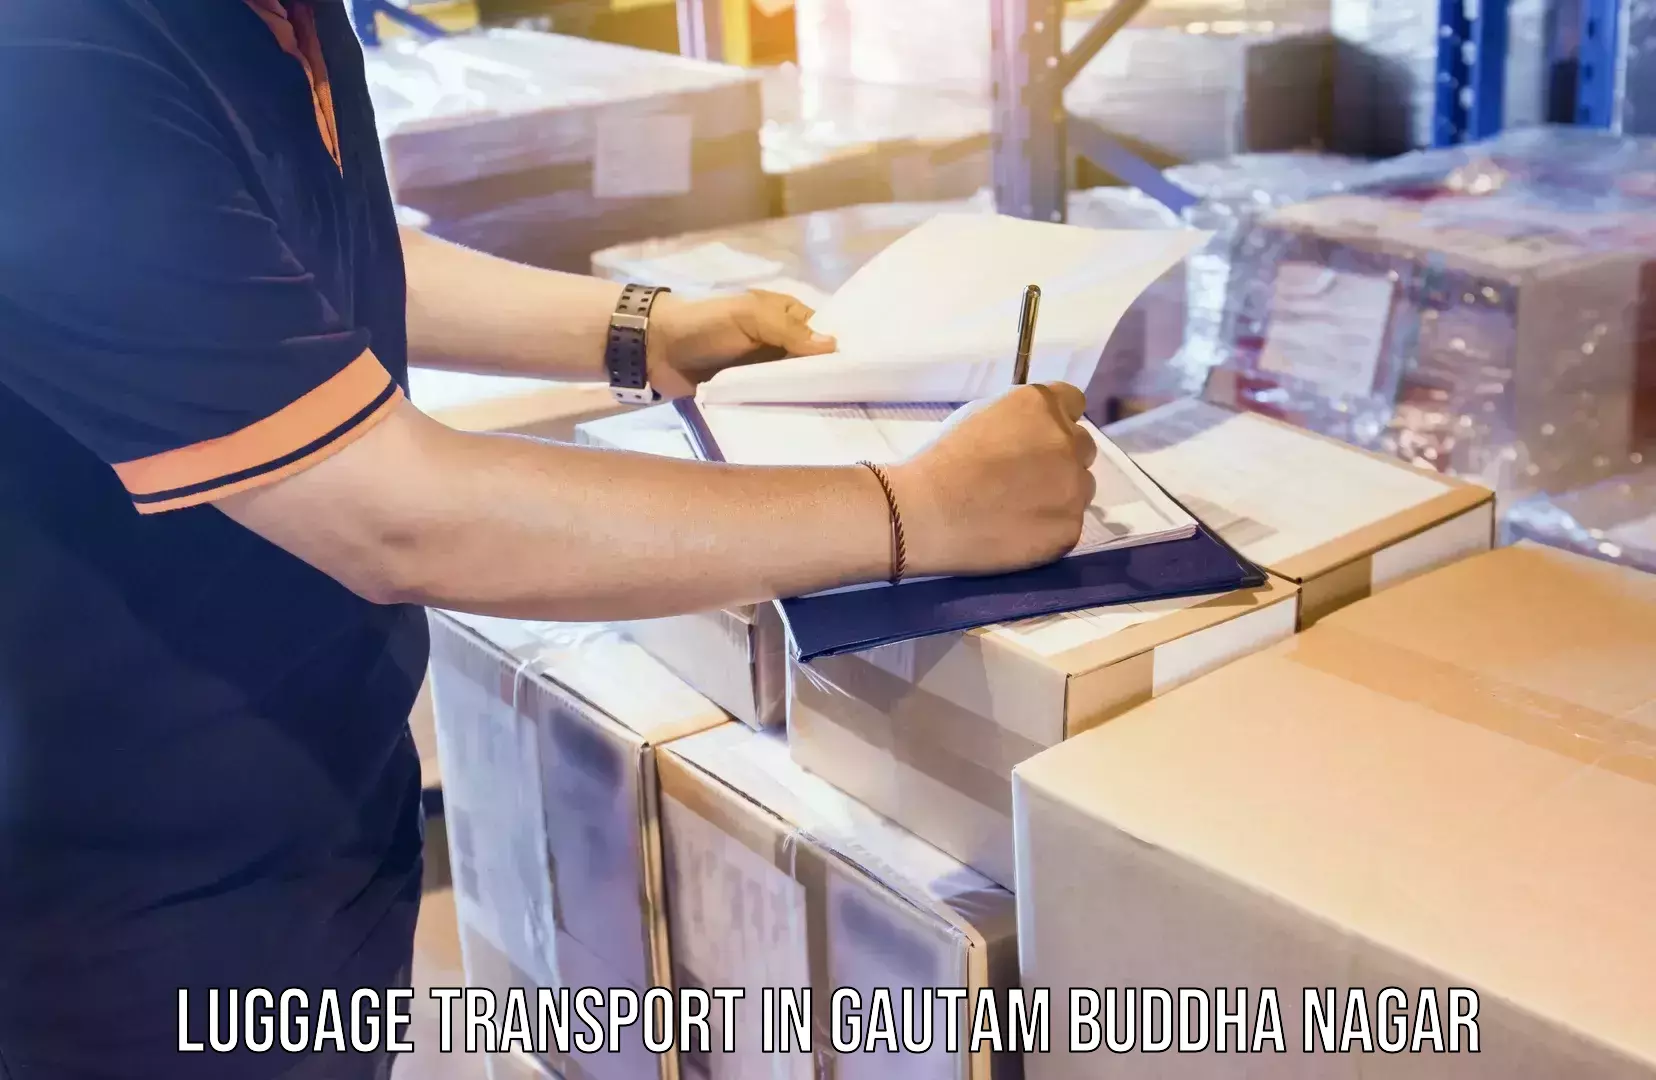 Luggage transport solutions in Gautam Buddha Nagar